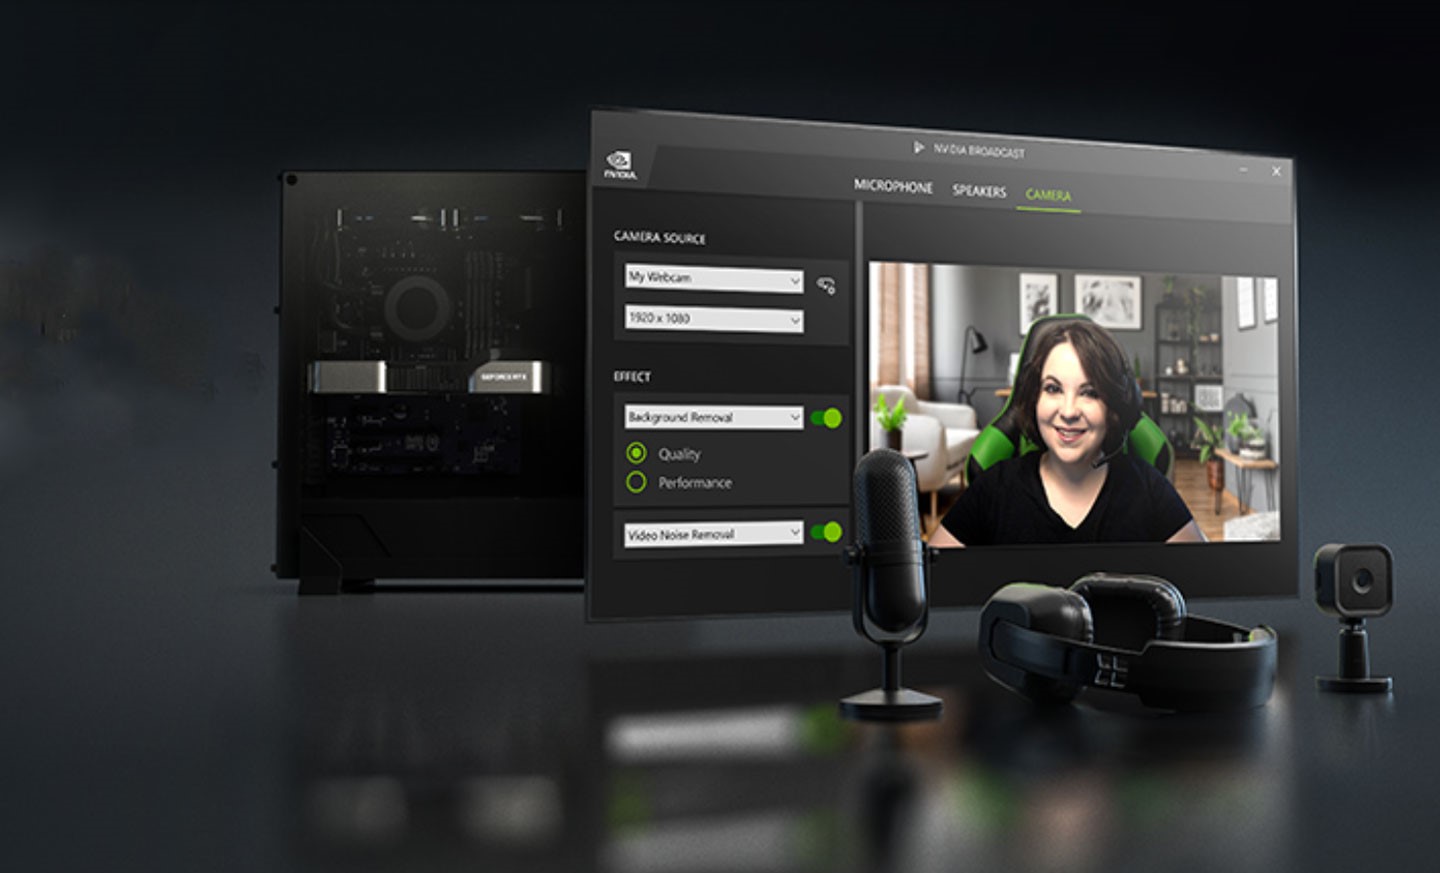 NVIDIA Broadcast 提供一系列視訊、音訊強化技術，可即時套用在視訊會或直之。